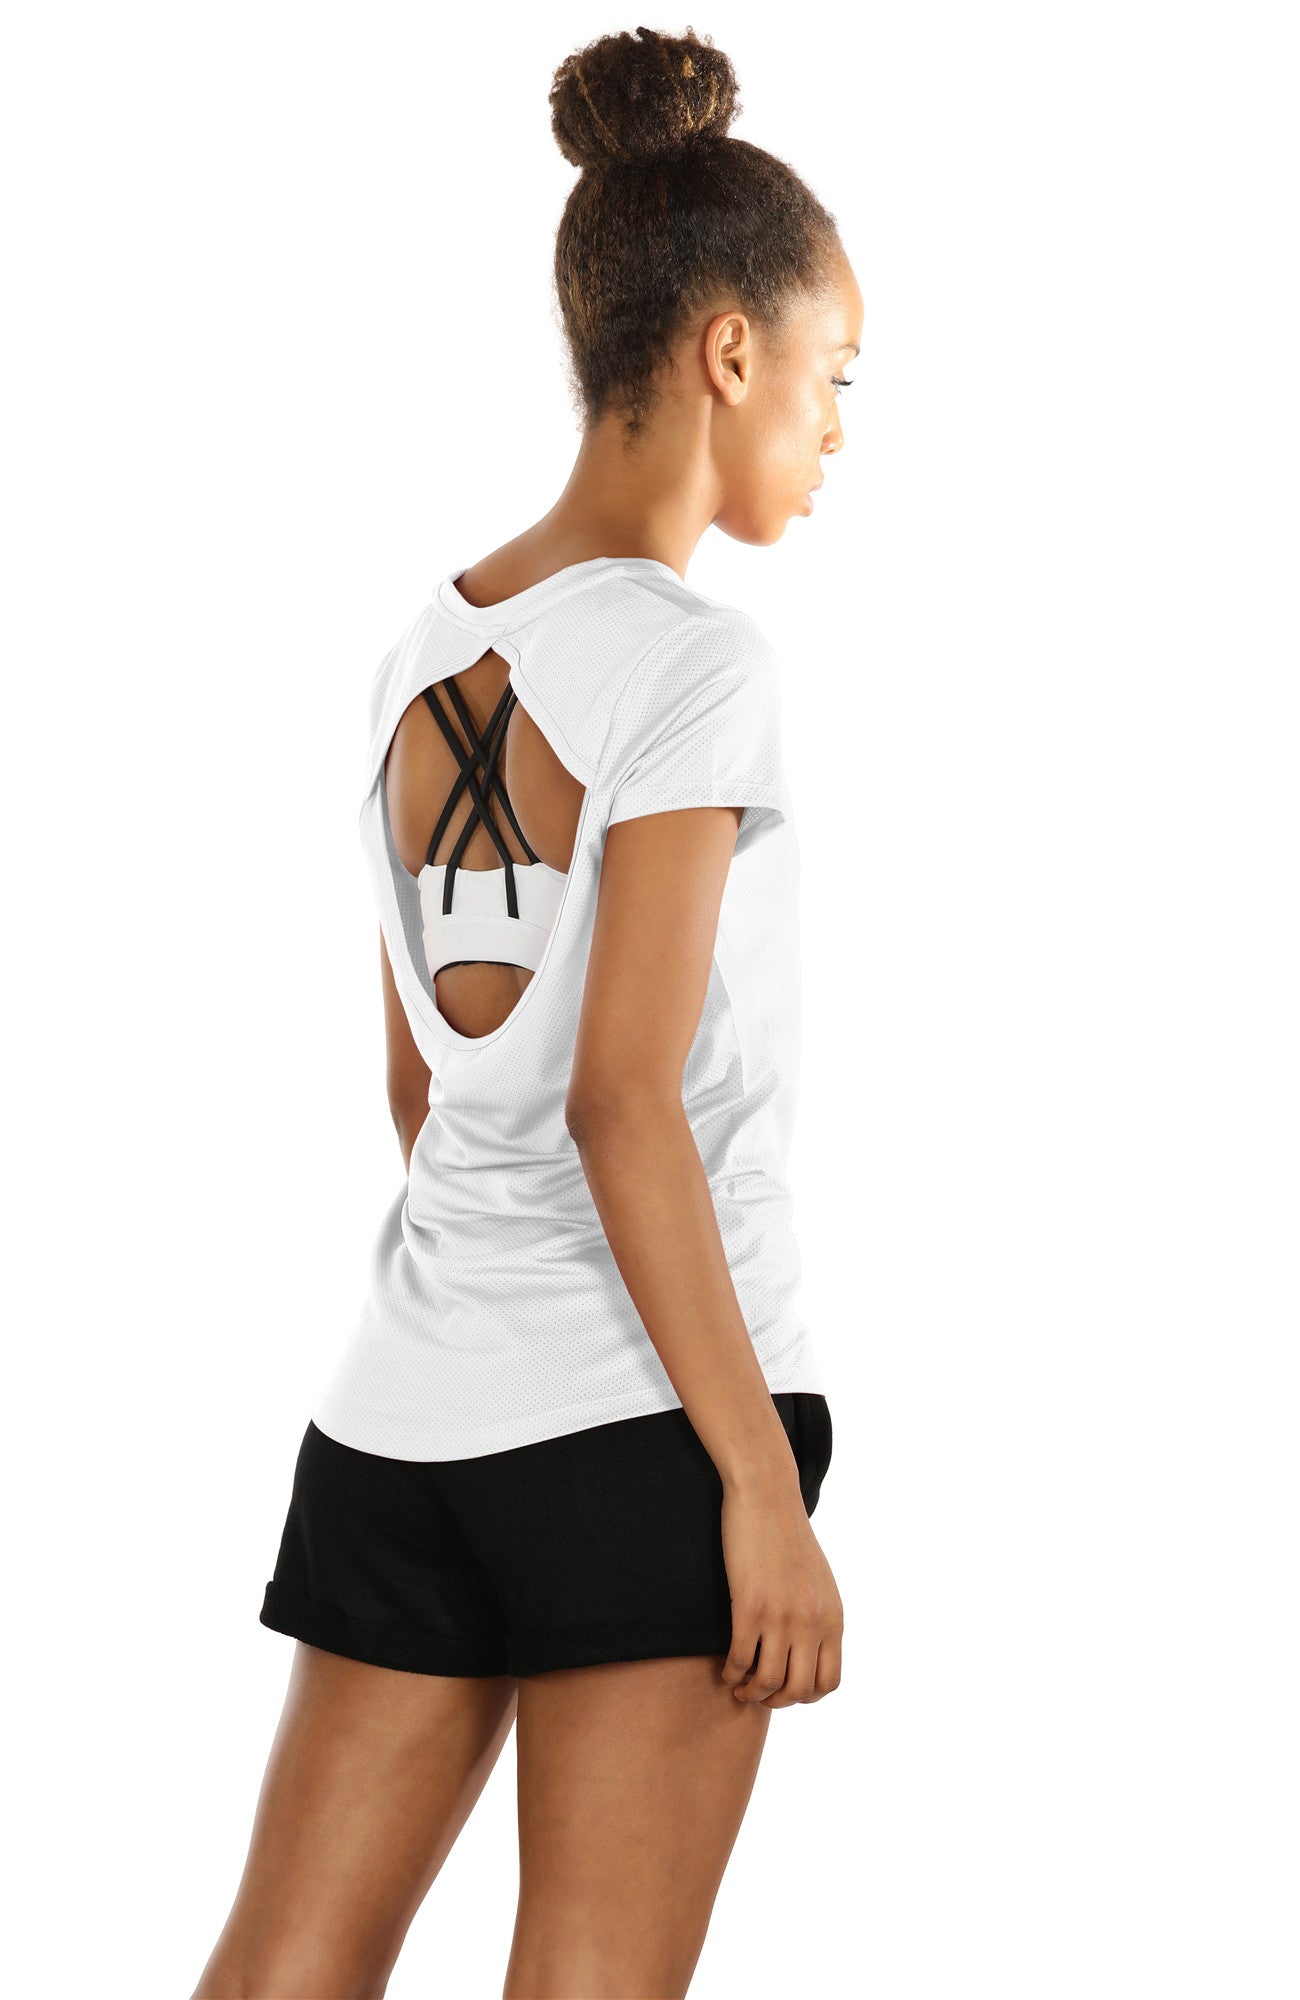 VigoBreviya Mesh Open Back Yoga Tops Women Sleeveless Fitness Sports T- shirts Female Gym Running Workout…